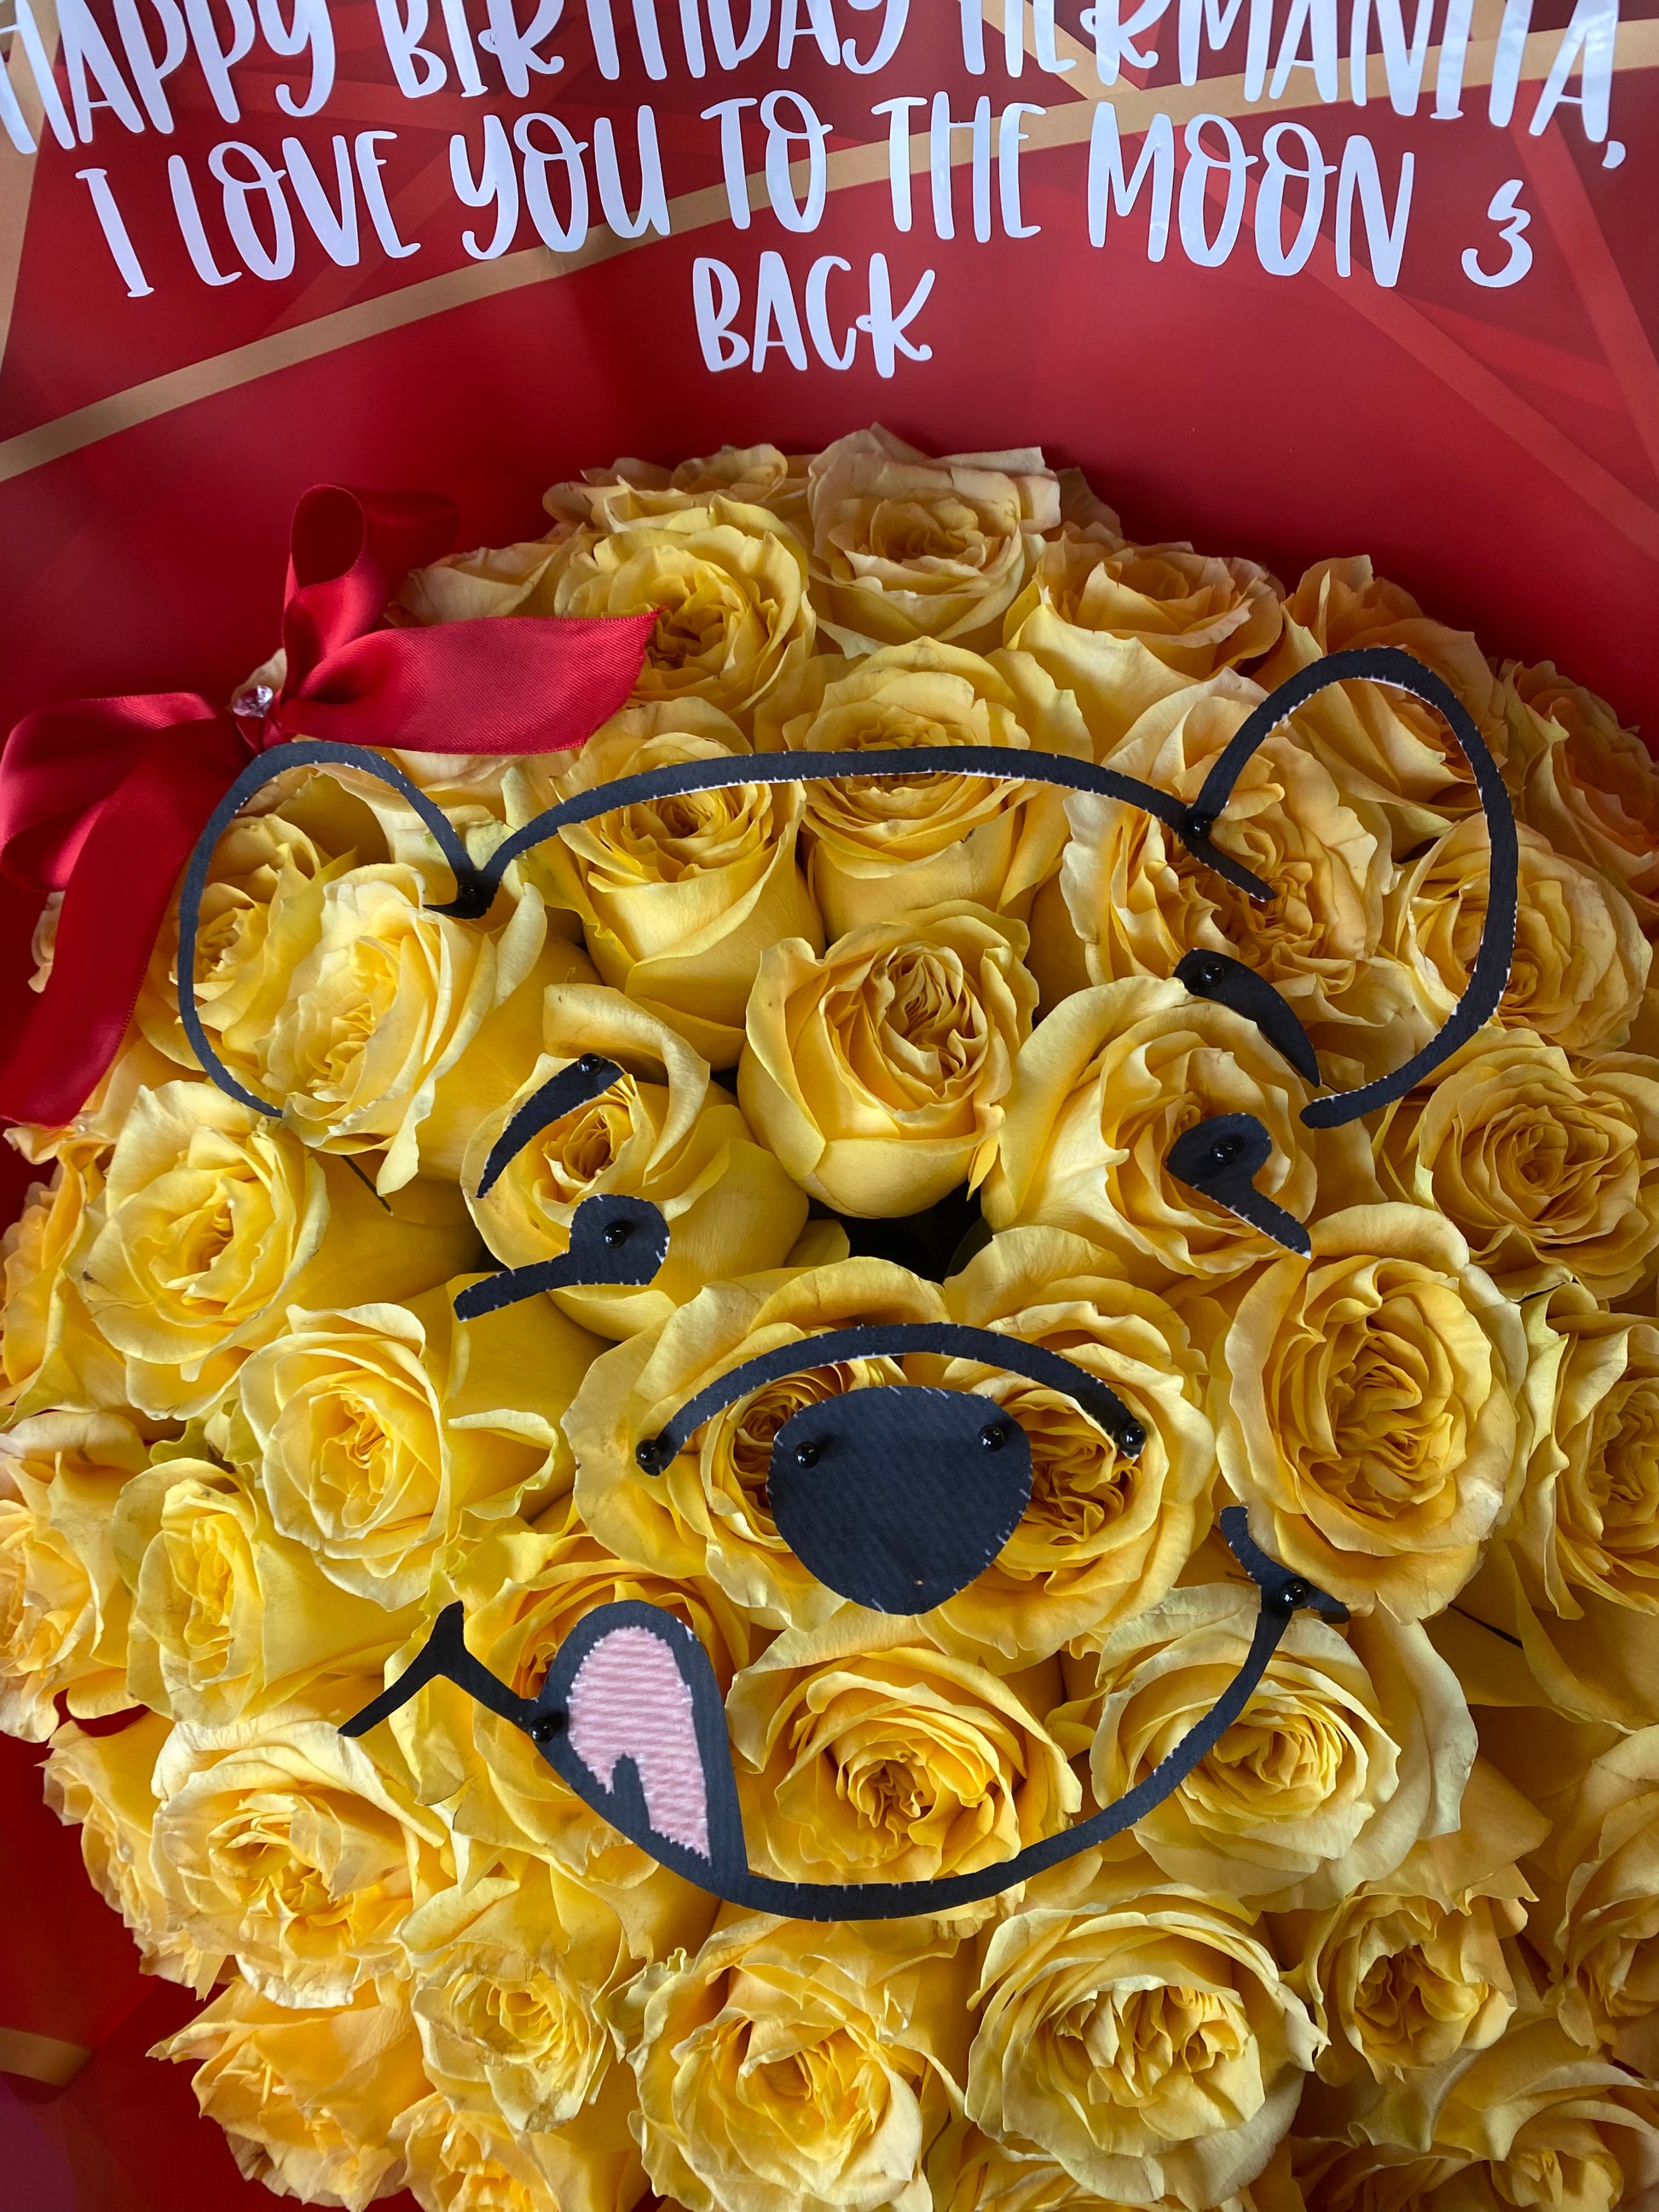 Winnie the pooh ribbon bouquet🍯🐻🥺❤️🤗💐 Happy Birthday mom🥳❤️ #win, Ribbon Rose Bouquet